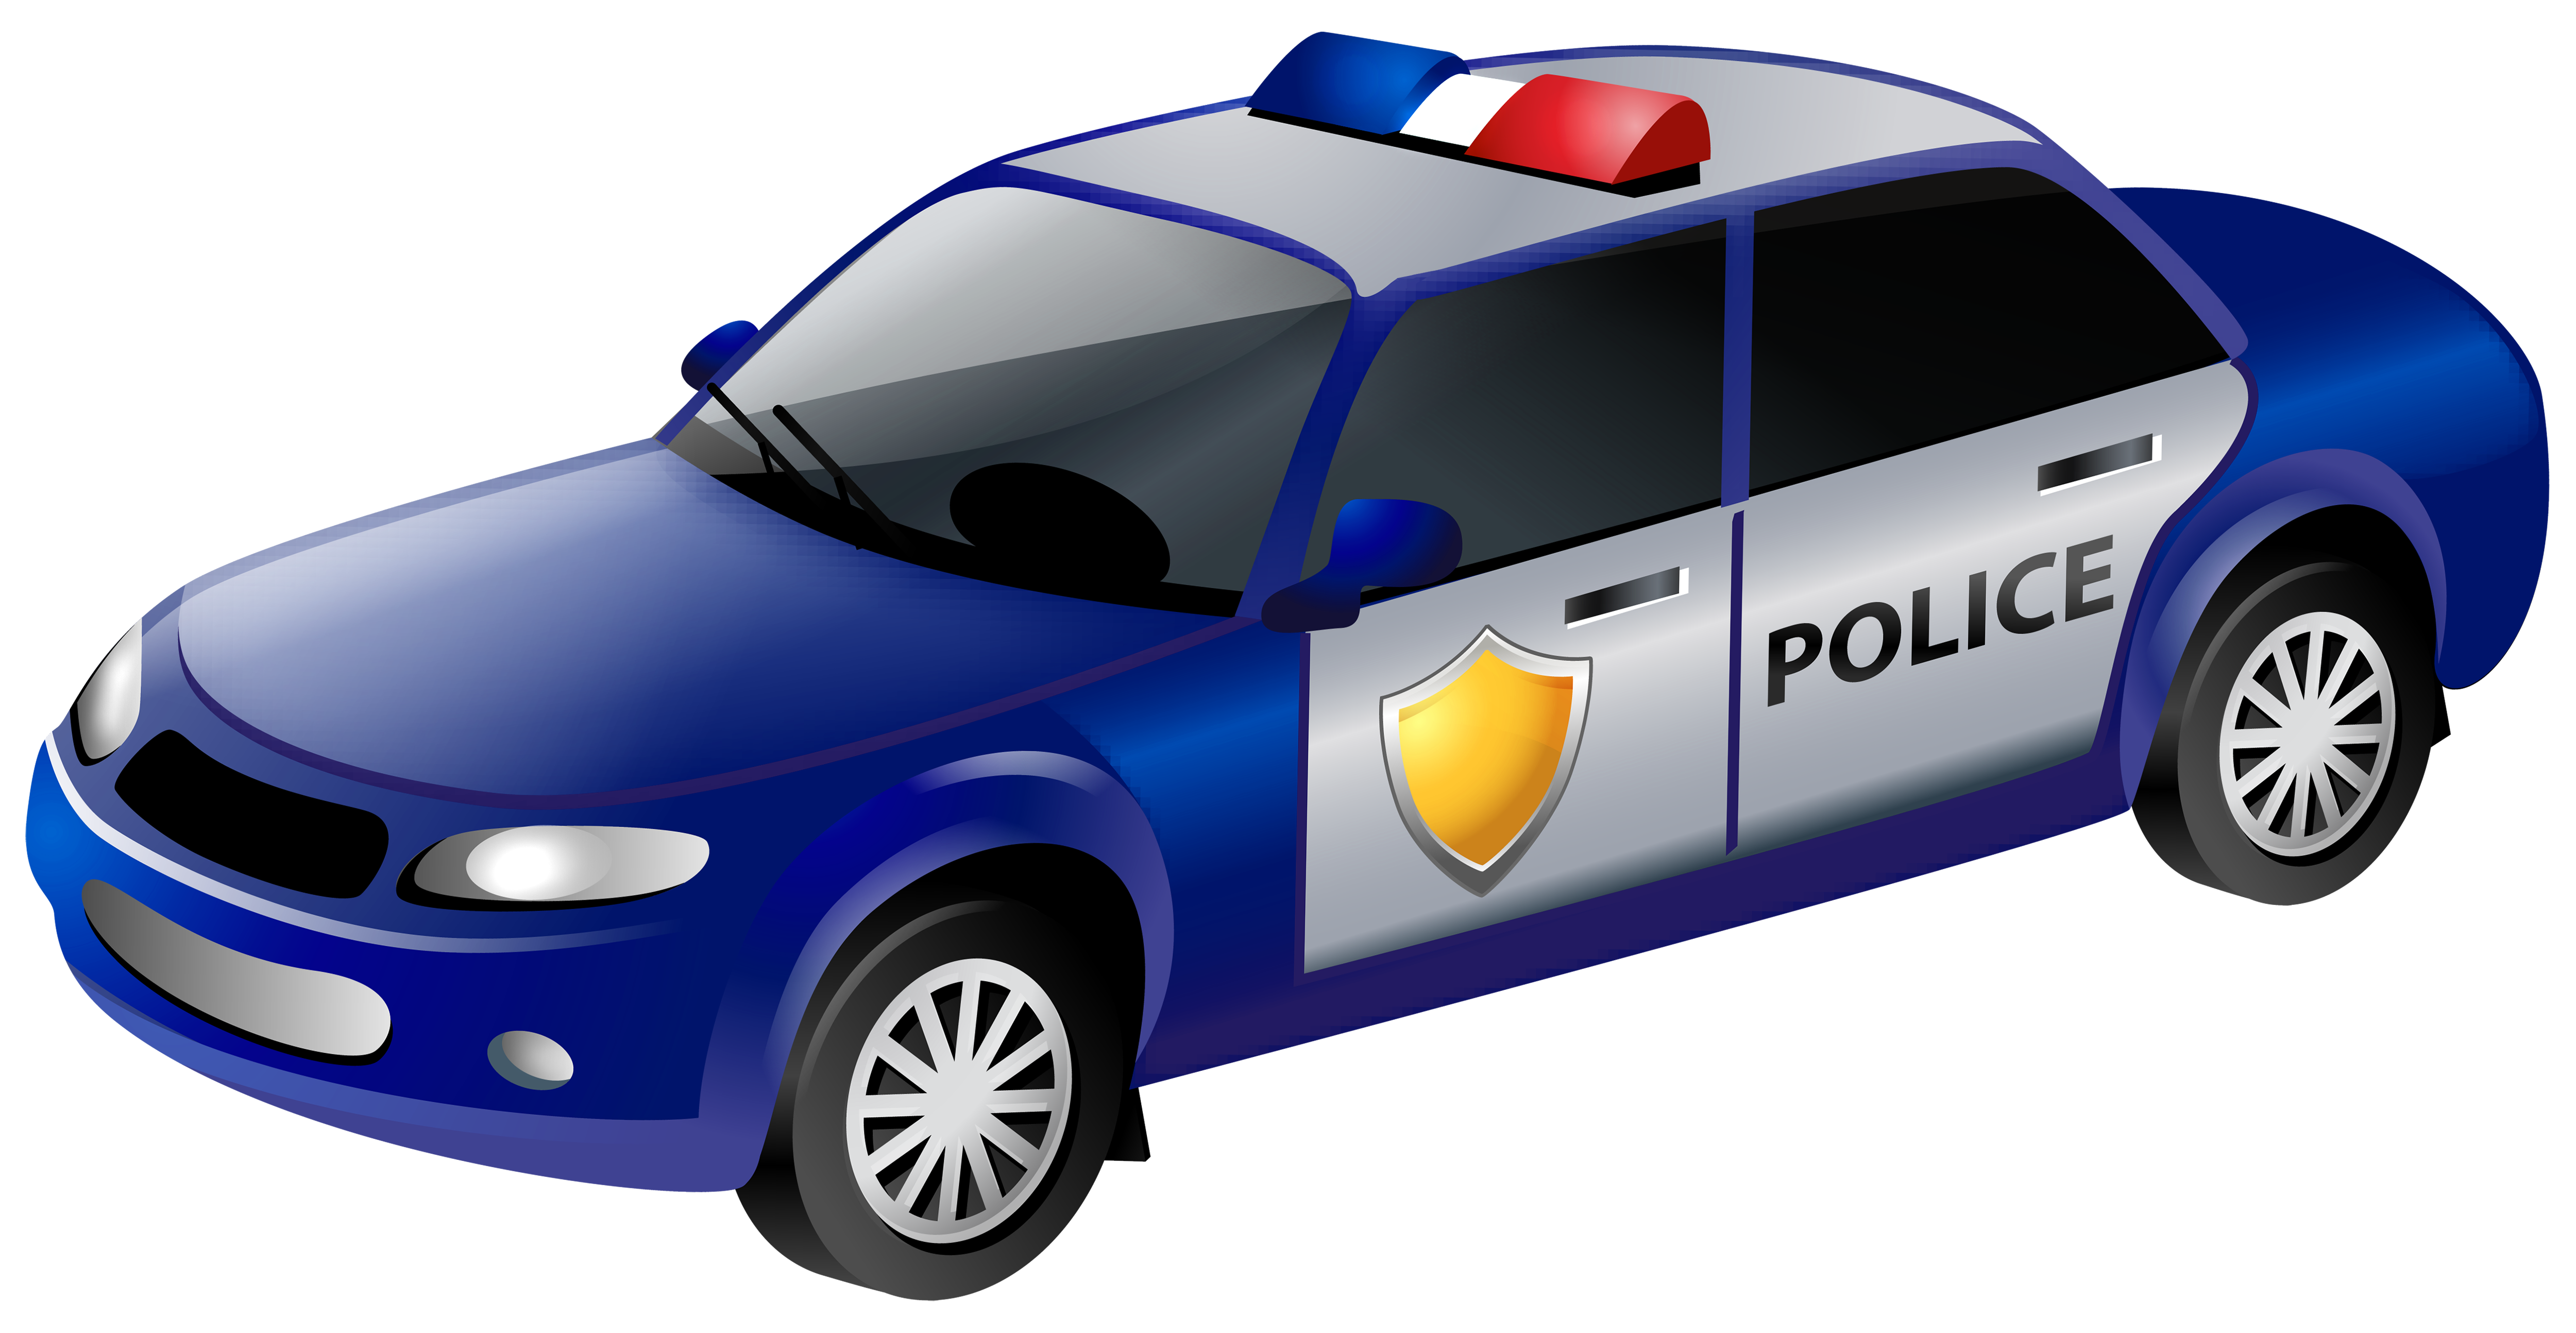 Car Clip Art Images Police Ca